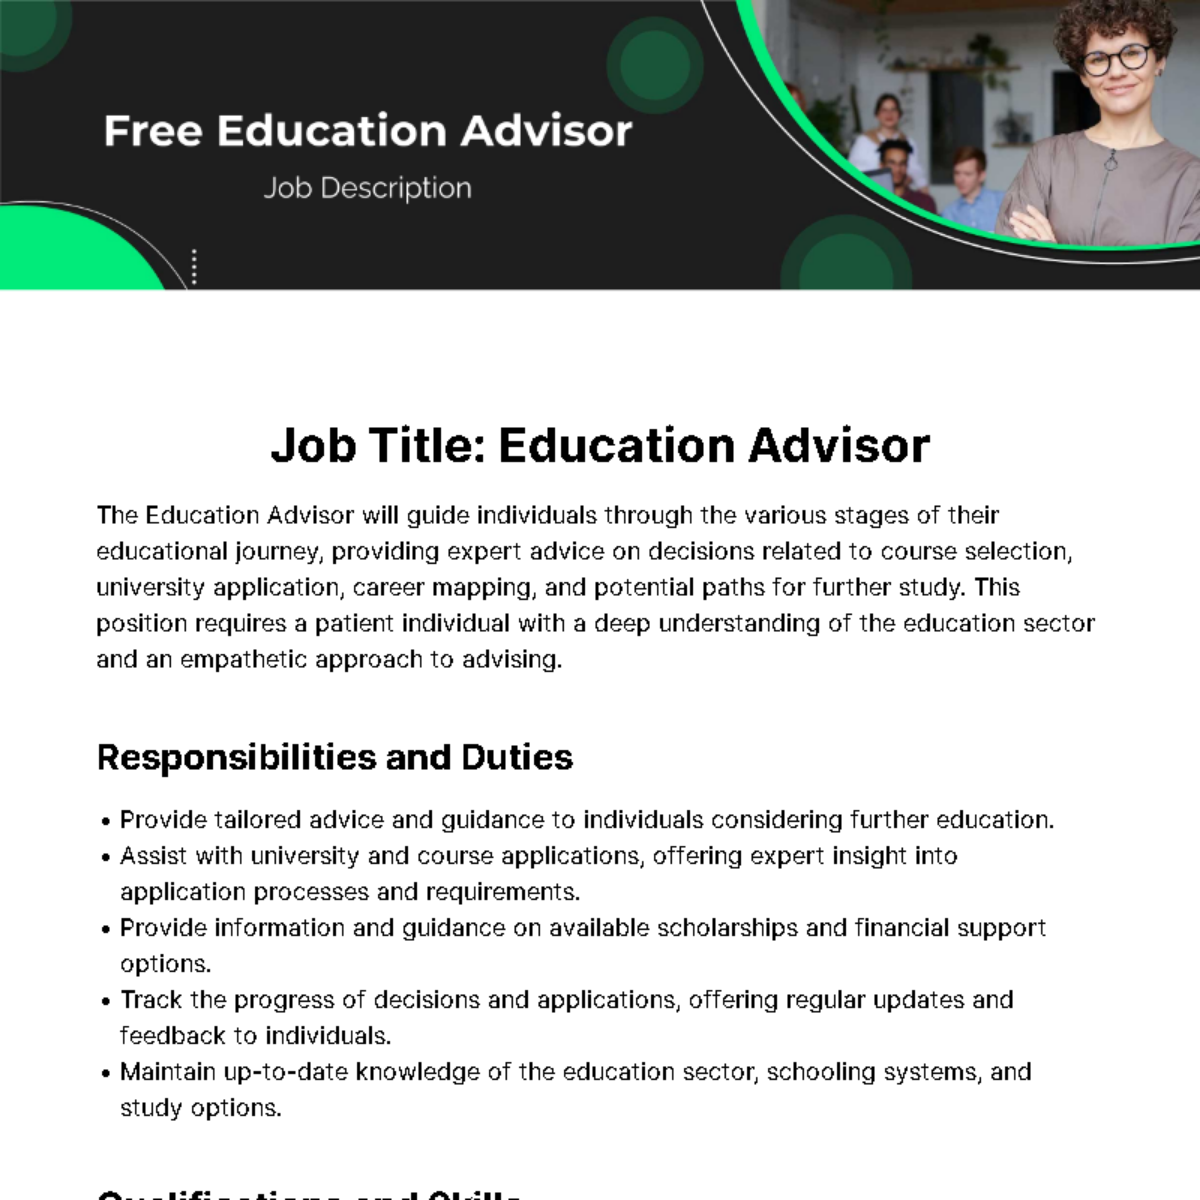 Free Education Advisor Job Description Template